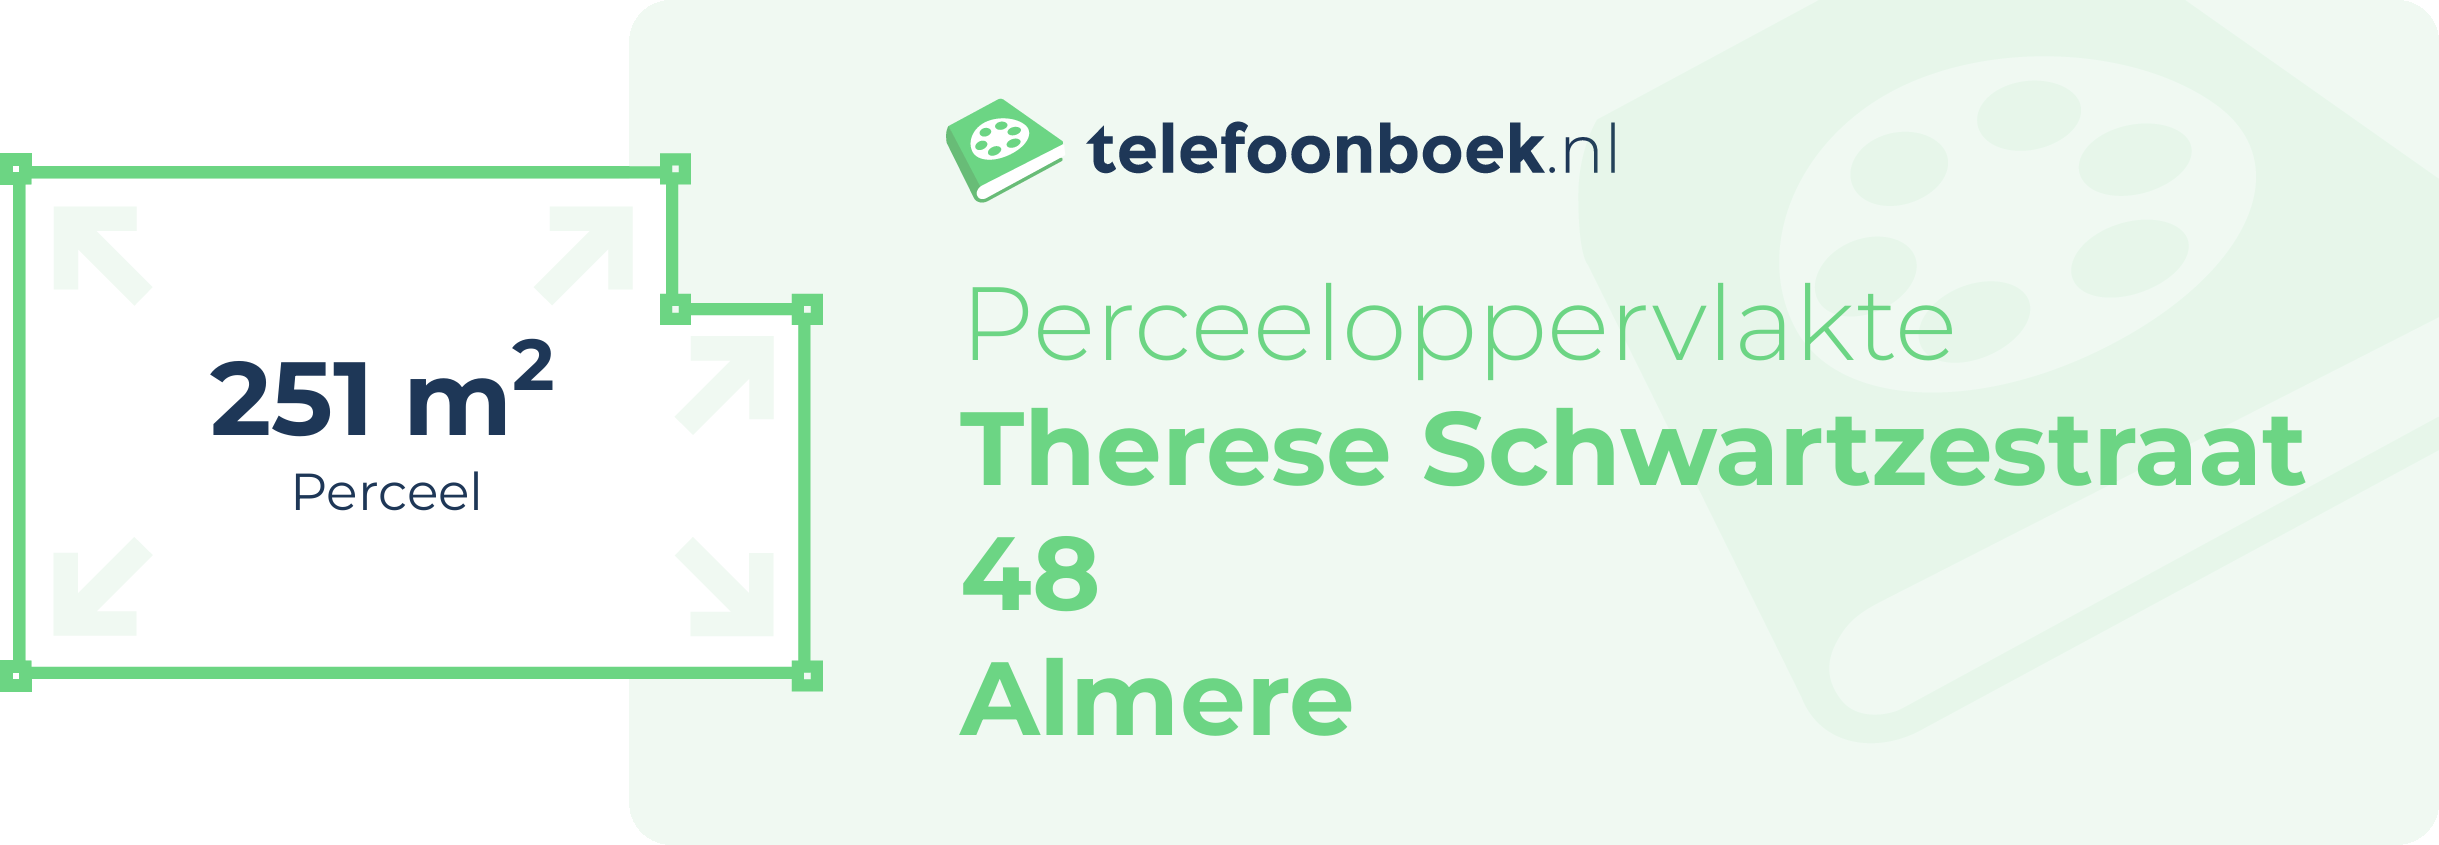 Perceeloppervlakte Therese Schwartzestraat 48 Almere